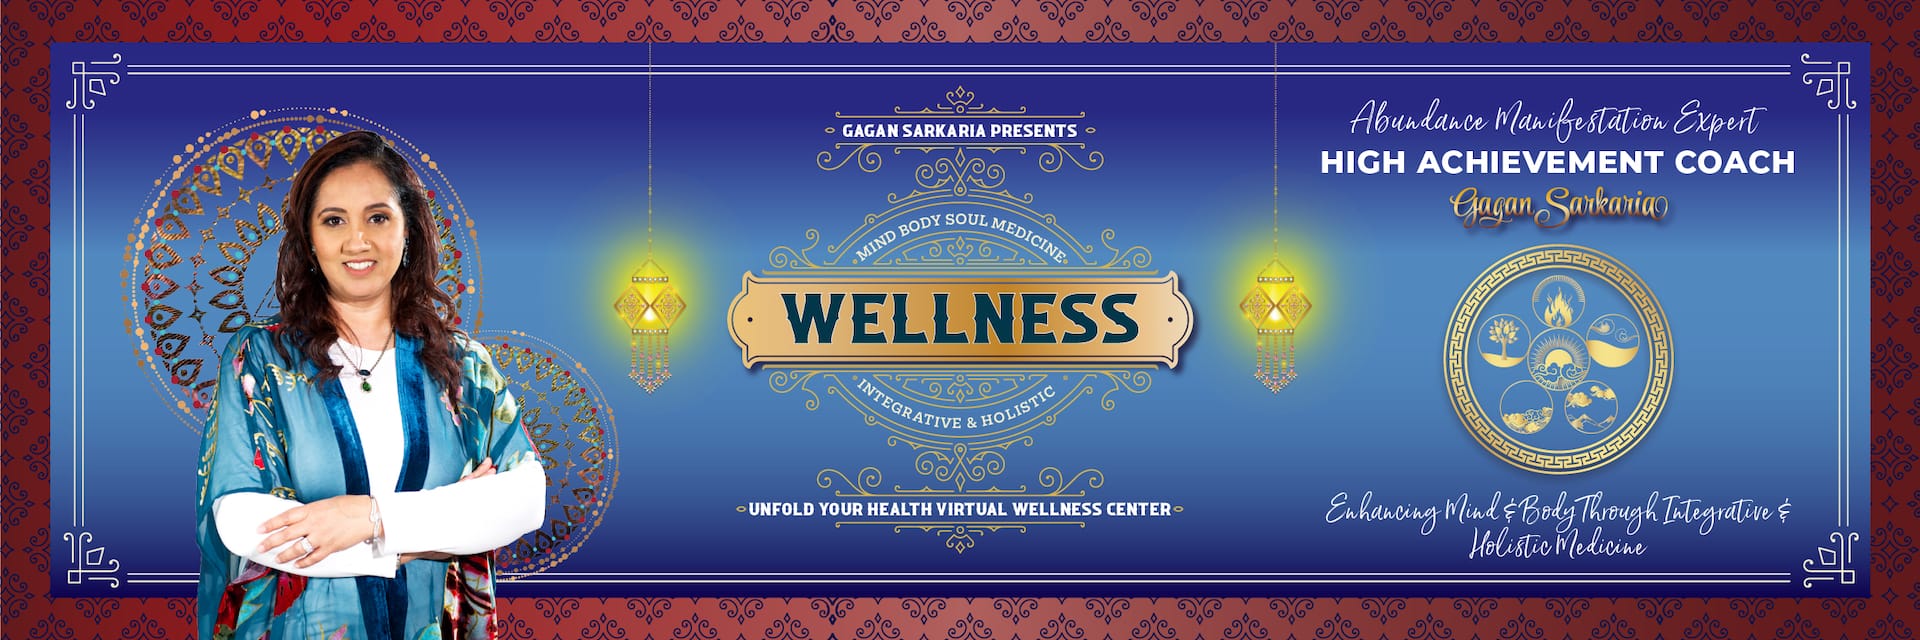 Banner Wellness with Gagan Sarkaria 2400 x 800